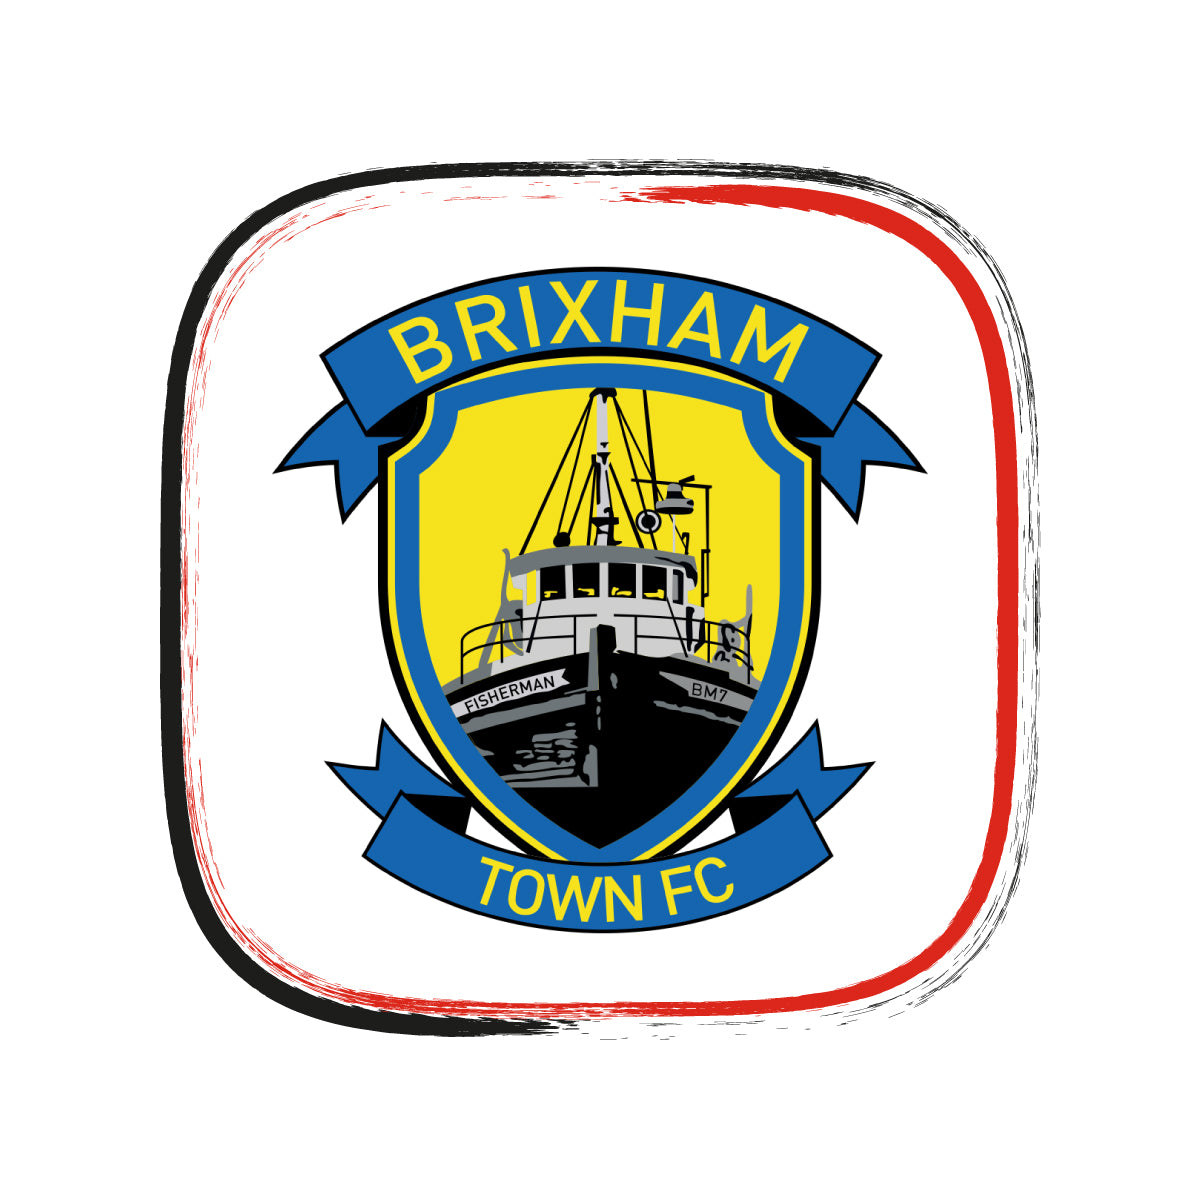 Brixham Town FC